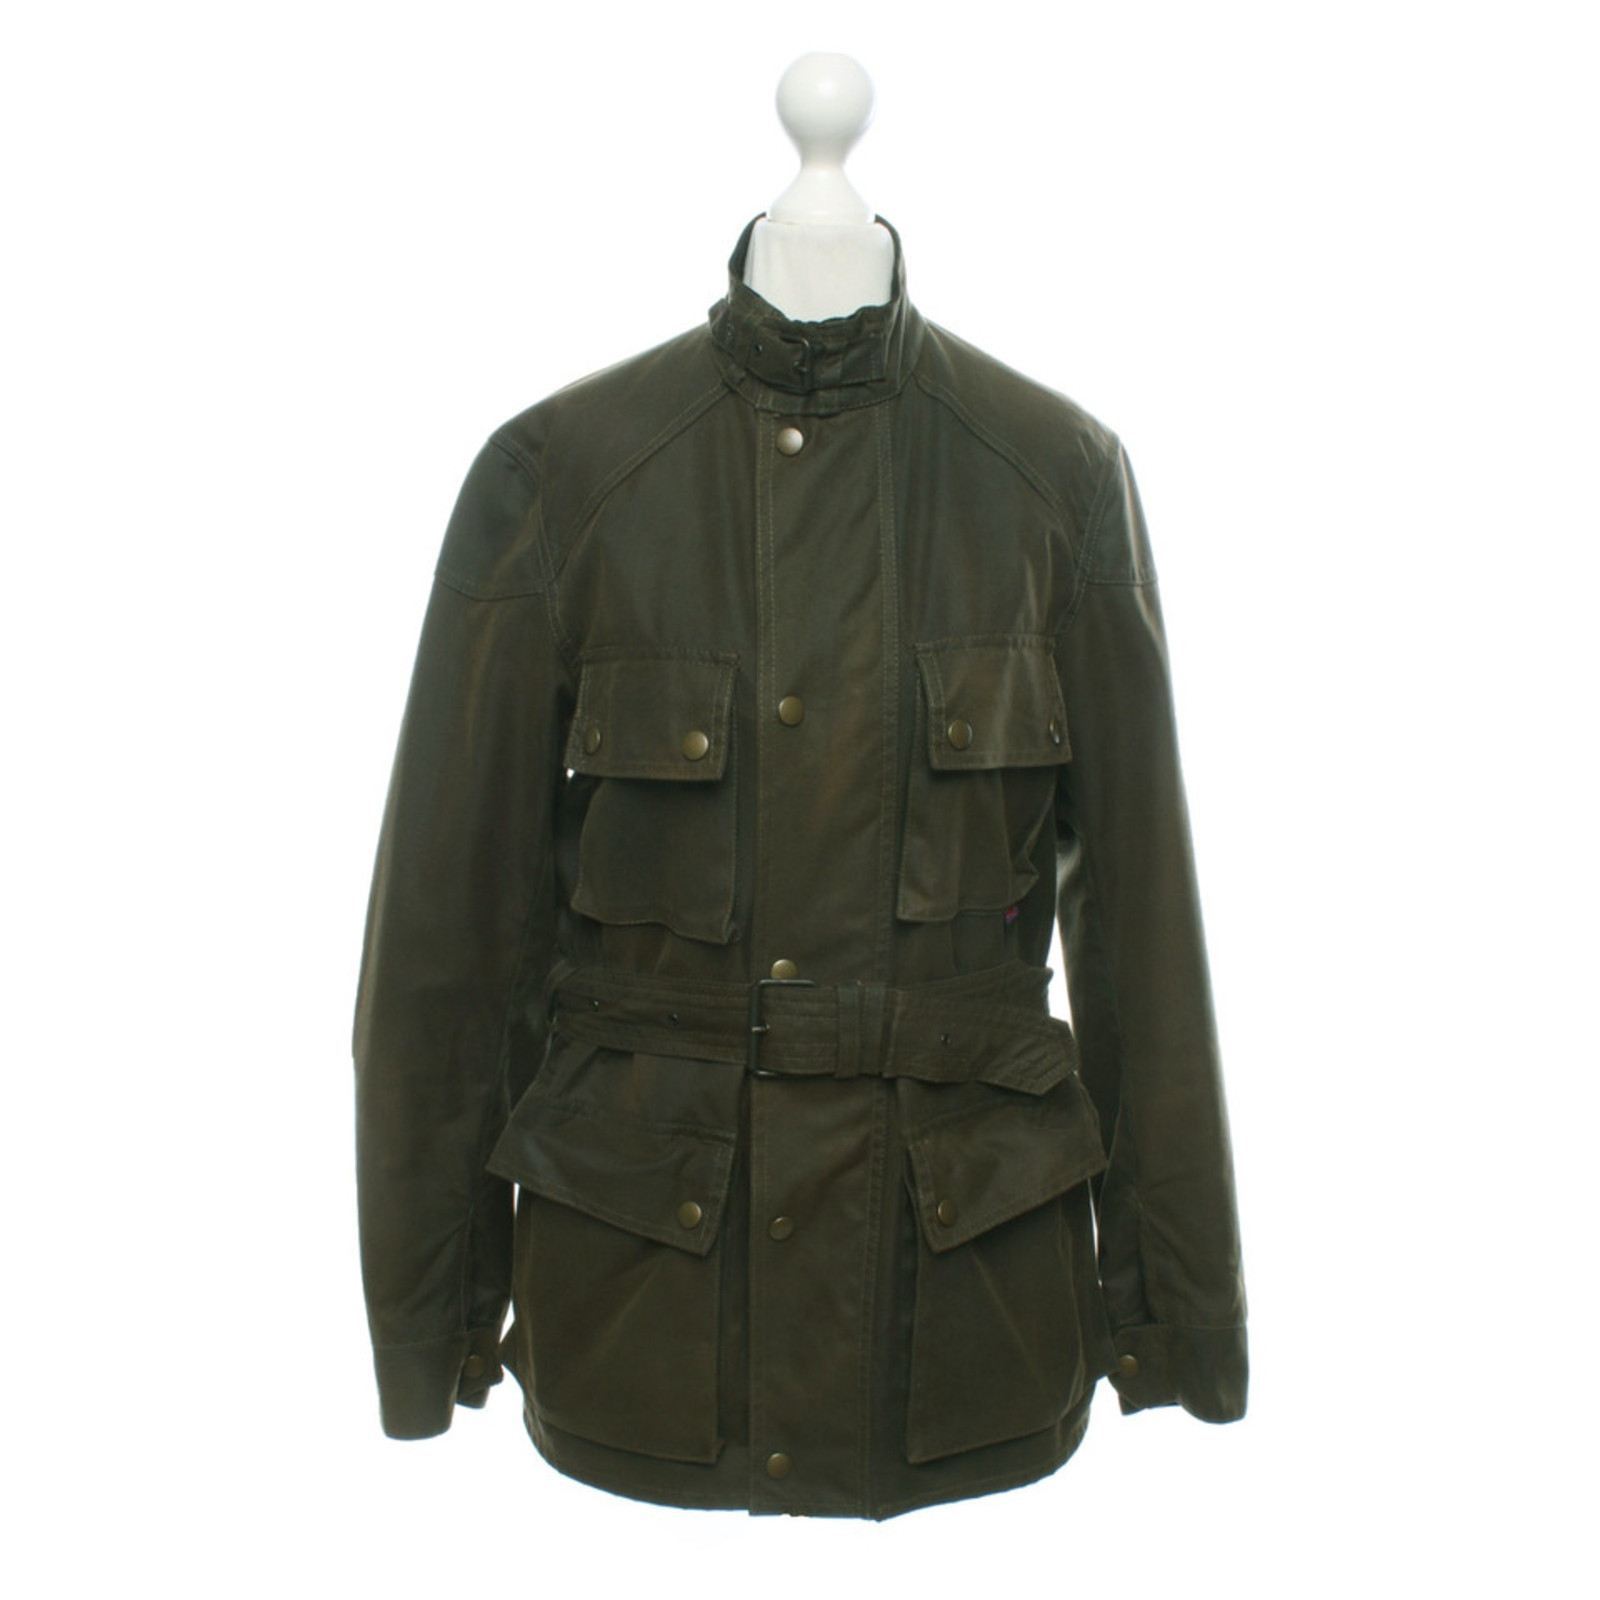 Lavar ventanas traqueteo legación BELSTAFF Women's Jacket/Coat Cotton in Olive Size: IT 42